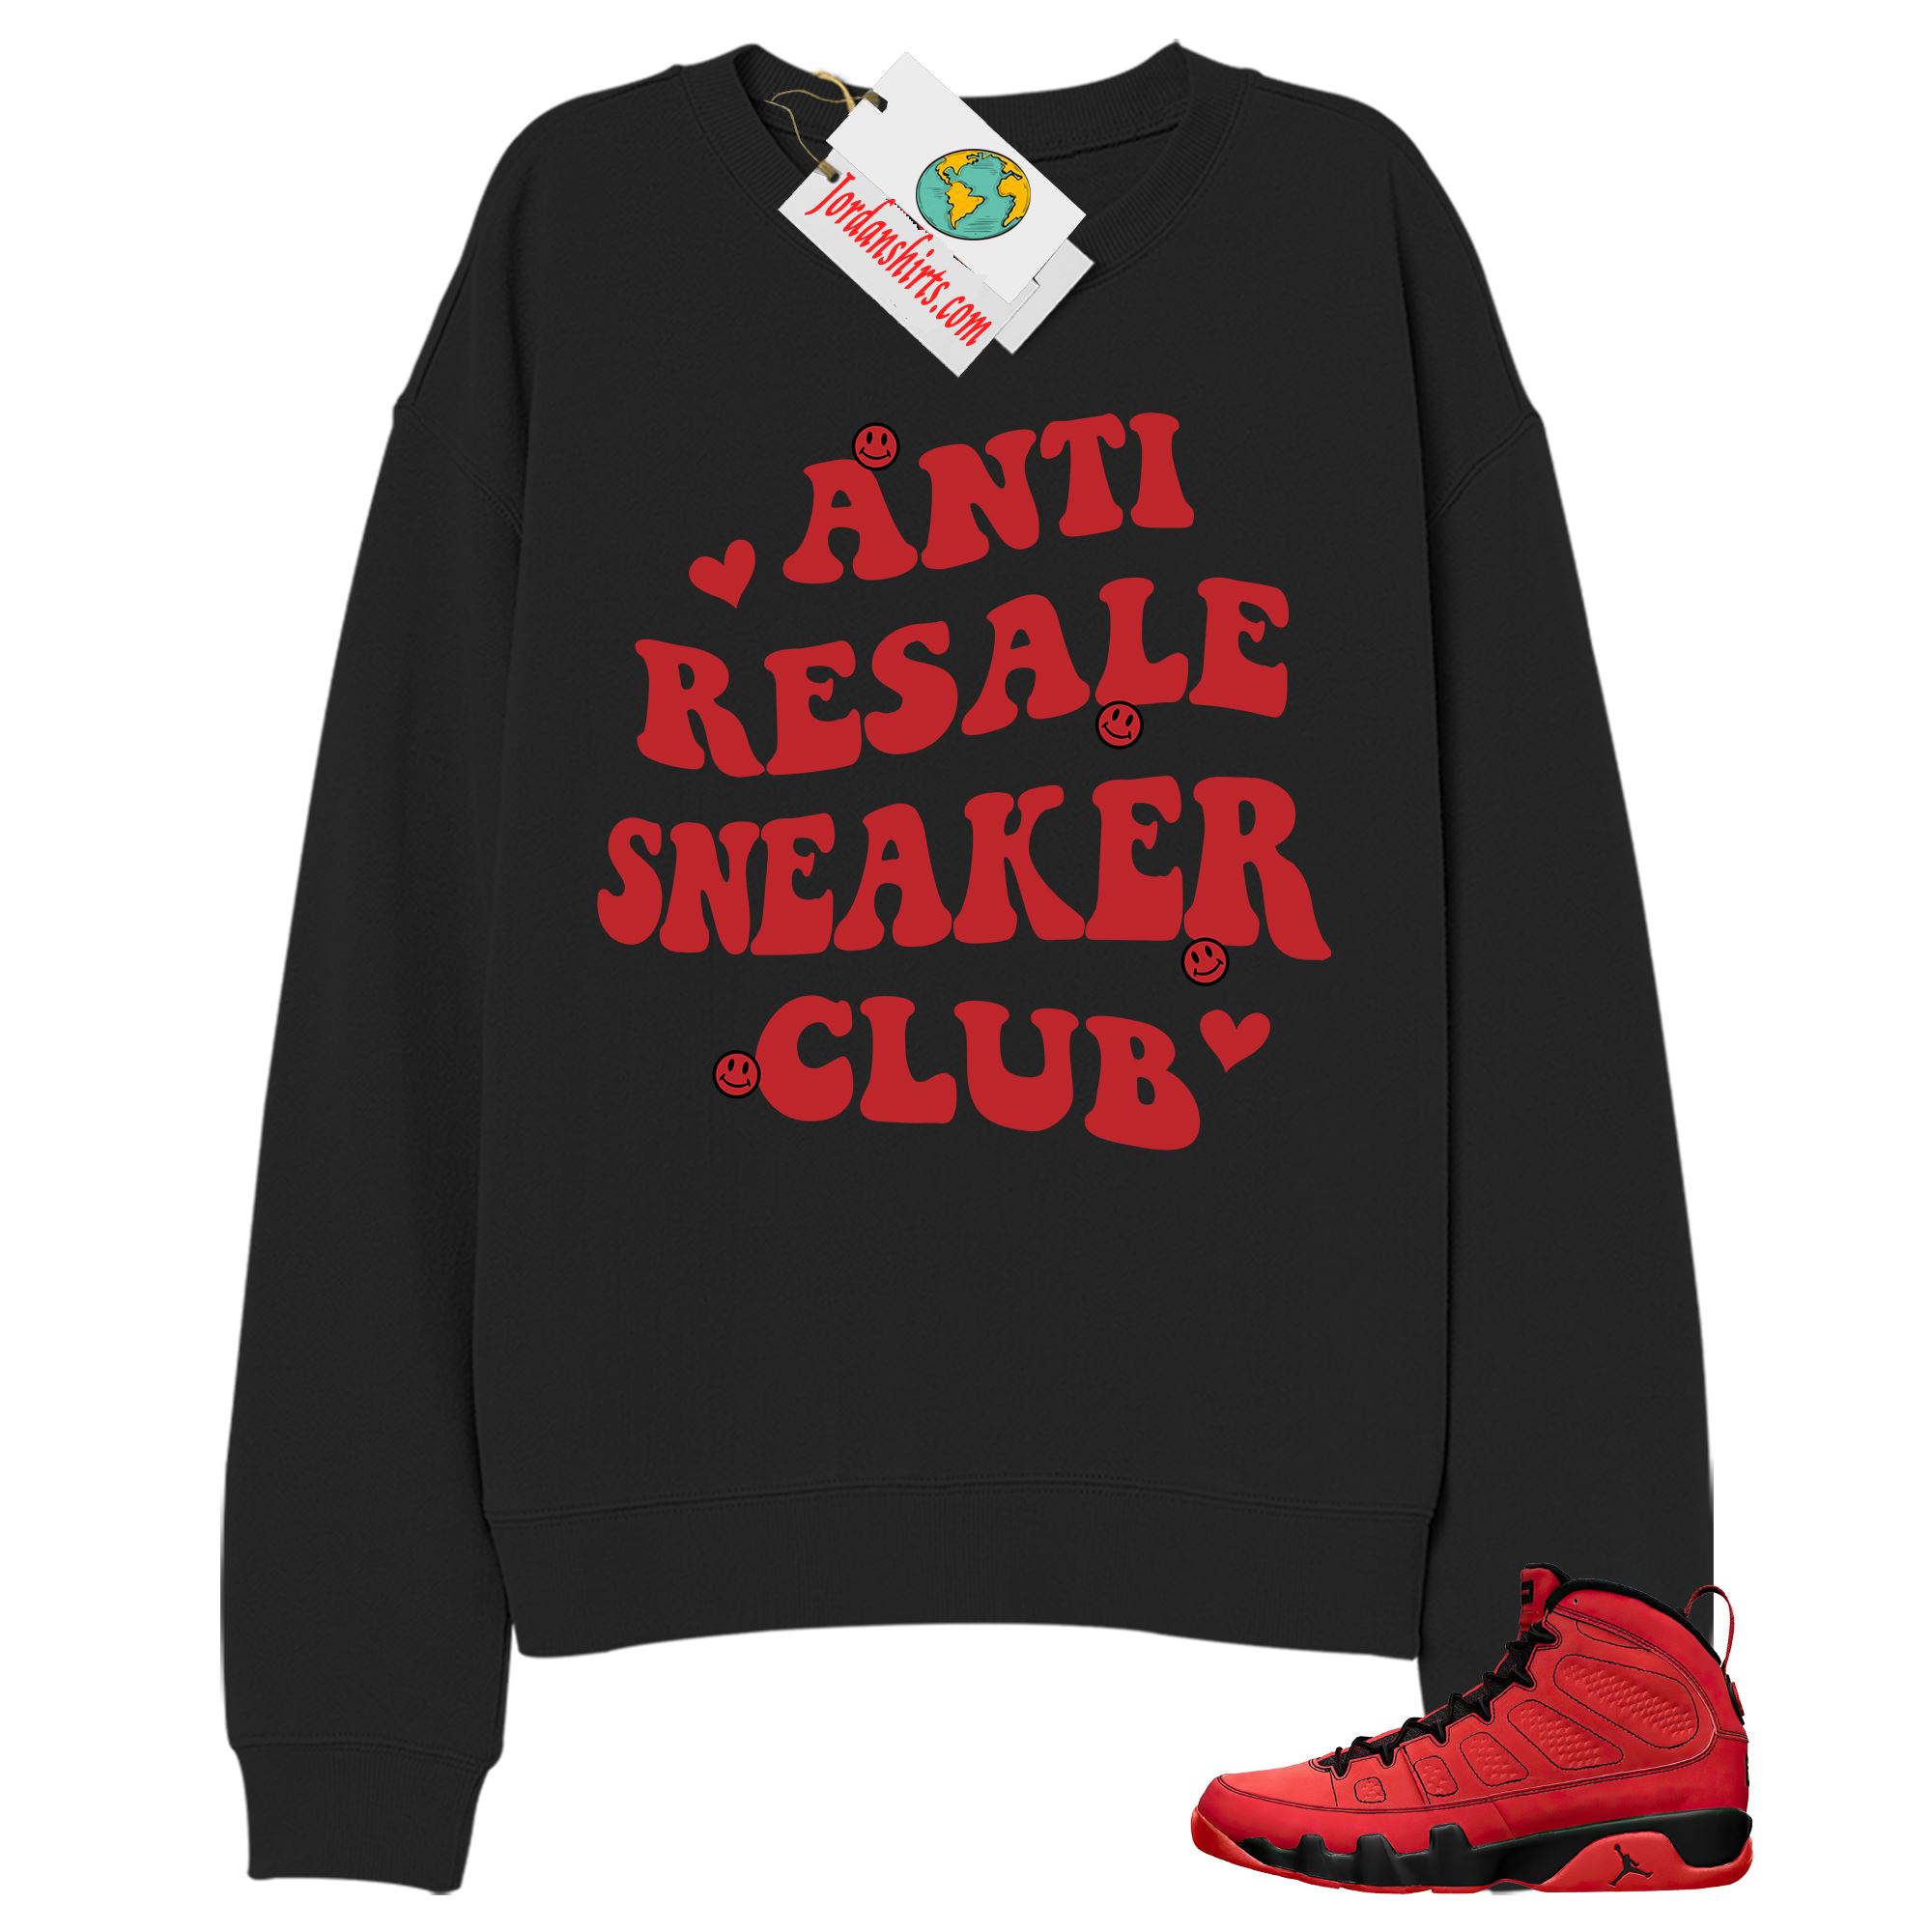 Jordan 9 Sweatshirt, Anti Resale Sneaker Club Black Sweatshirt Air Jordan 9 Chile Red 9s Plus Size Up To 5xl